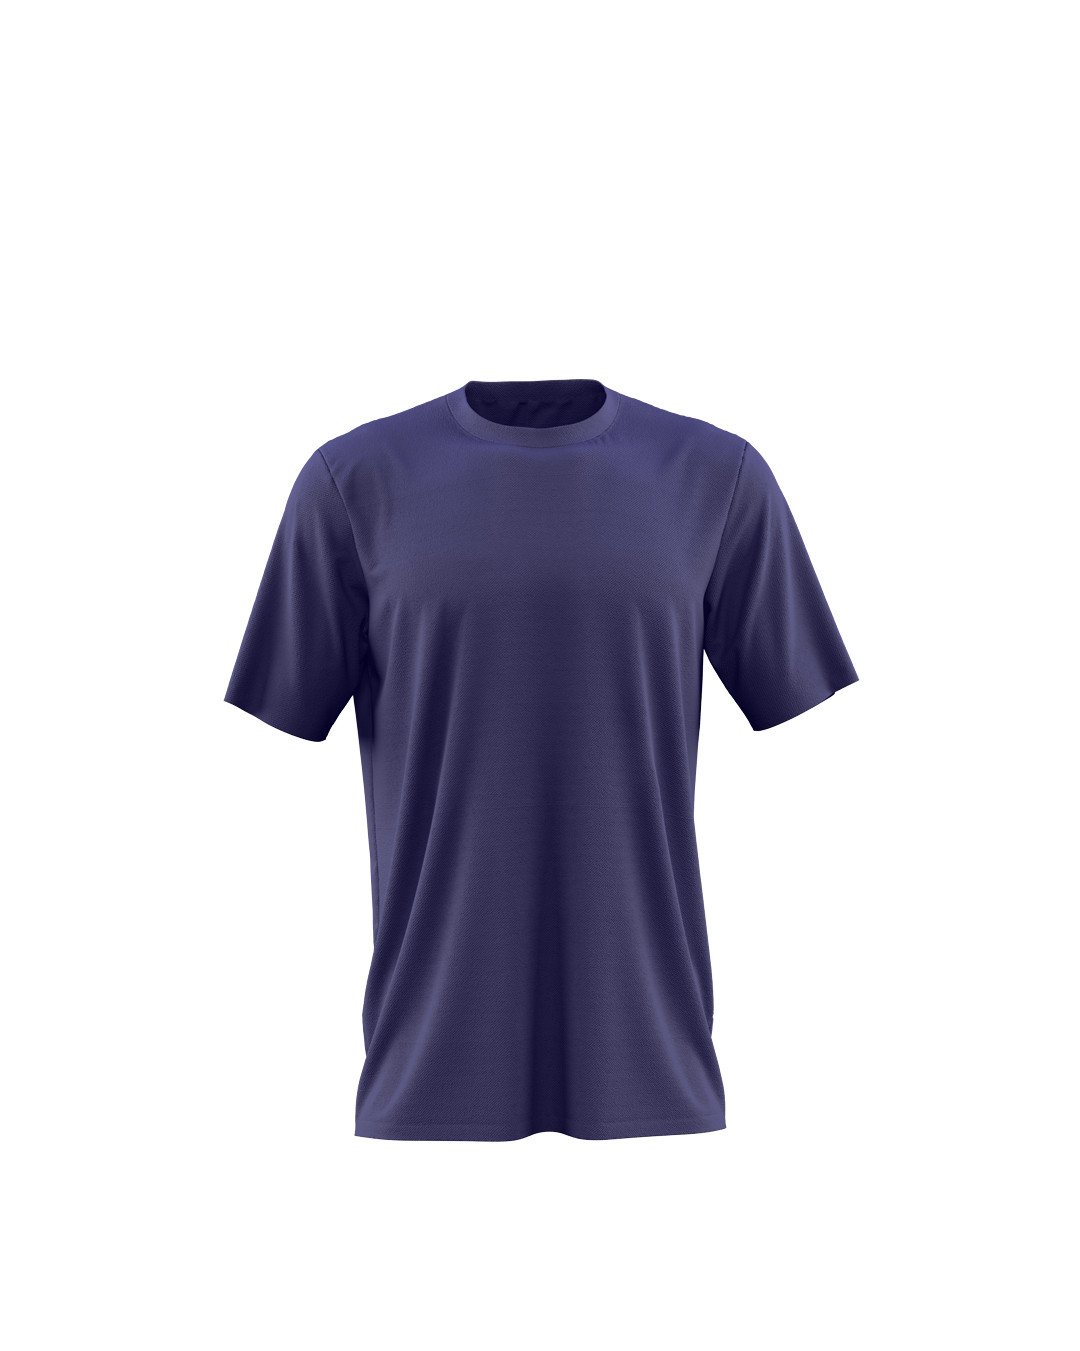 TeesWarrior Plain Round Neck Bio-washed Super Combed Navy Blue Cotton T-Shirt